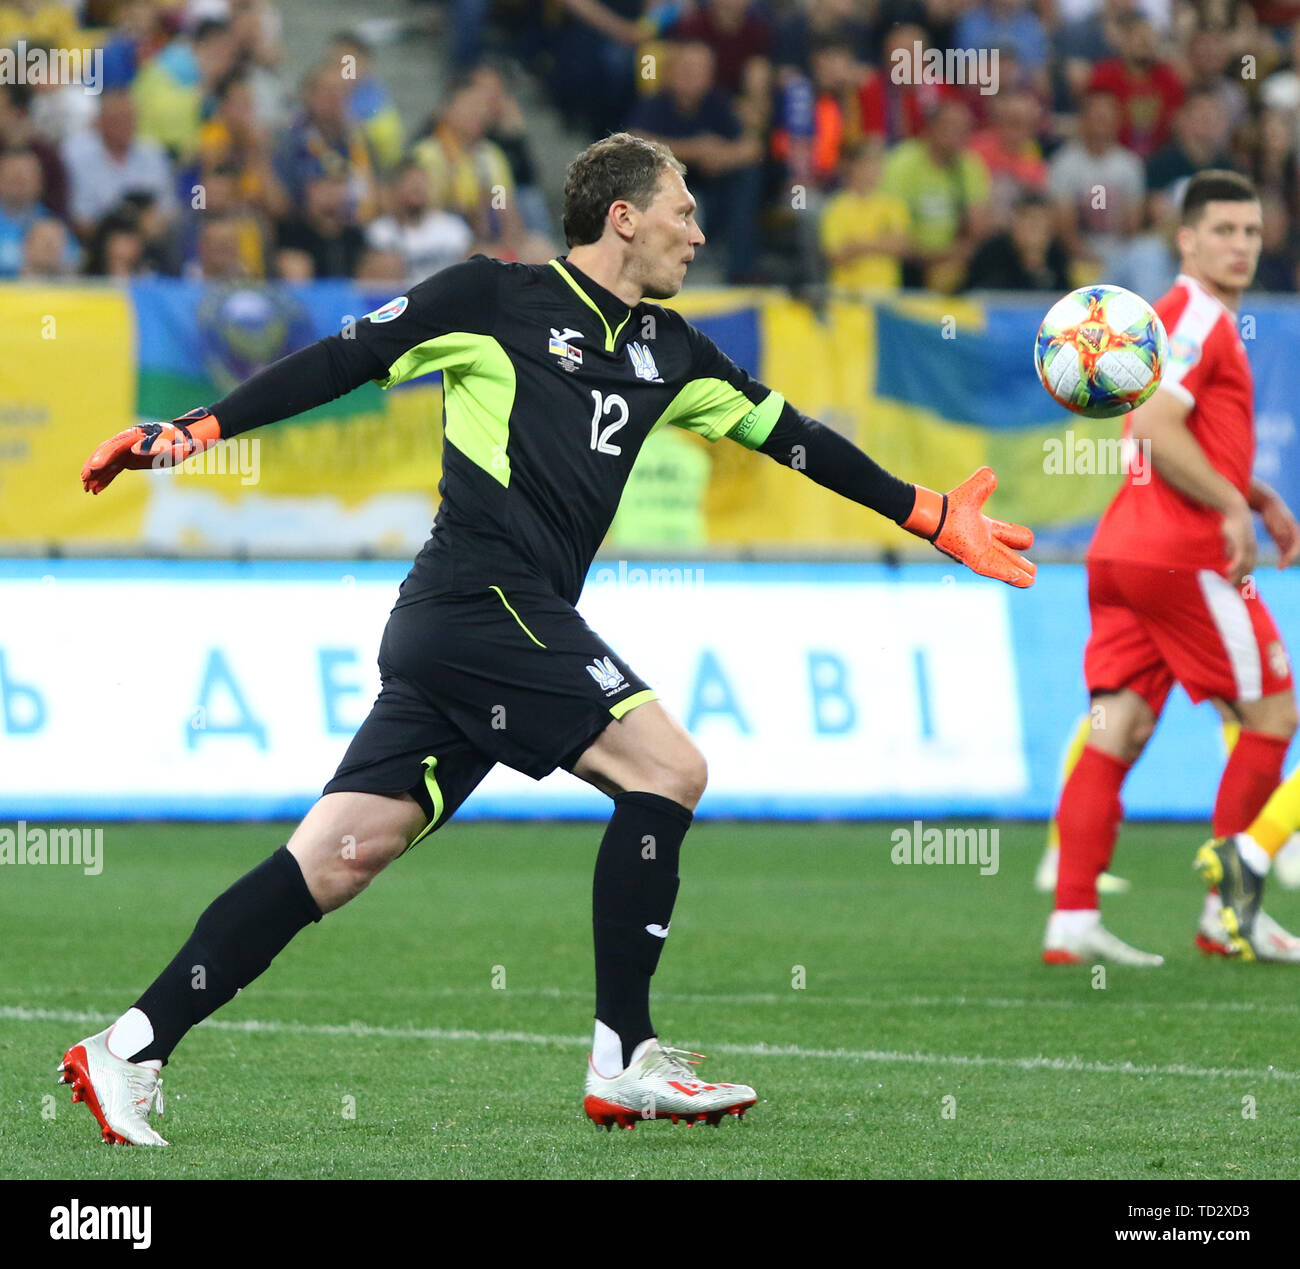 LVIV, UKRAINE - JUNE 7, 2019: Goalkeeper Andriy Pyatov of Ukraine in action during the UEFA EURO 2020 Qualifying game against Serbia at Arena Lviv sta Stock Photo